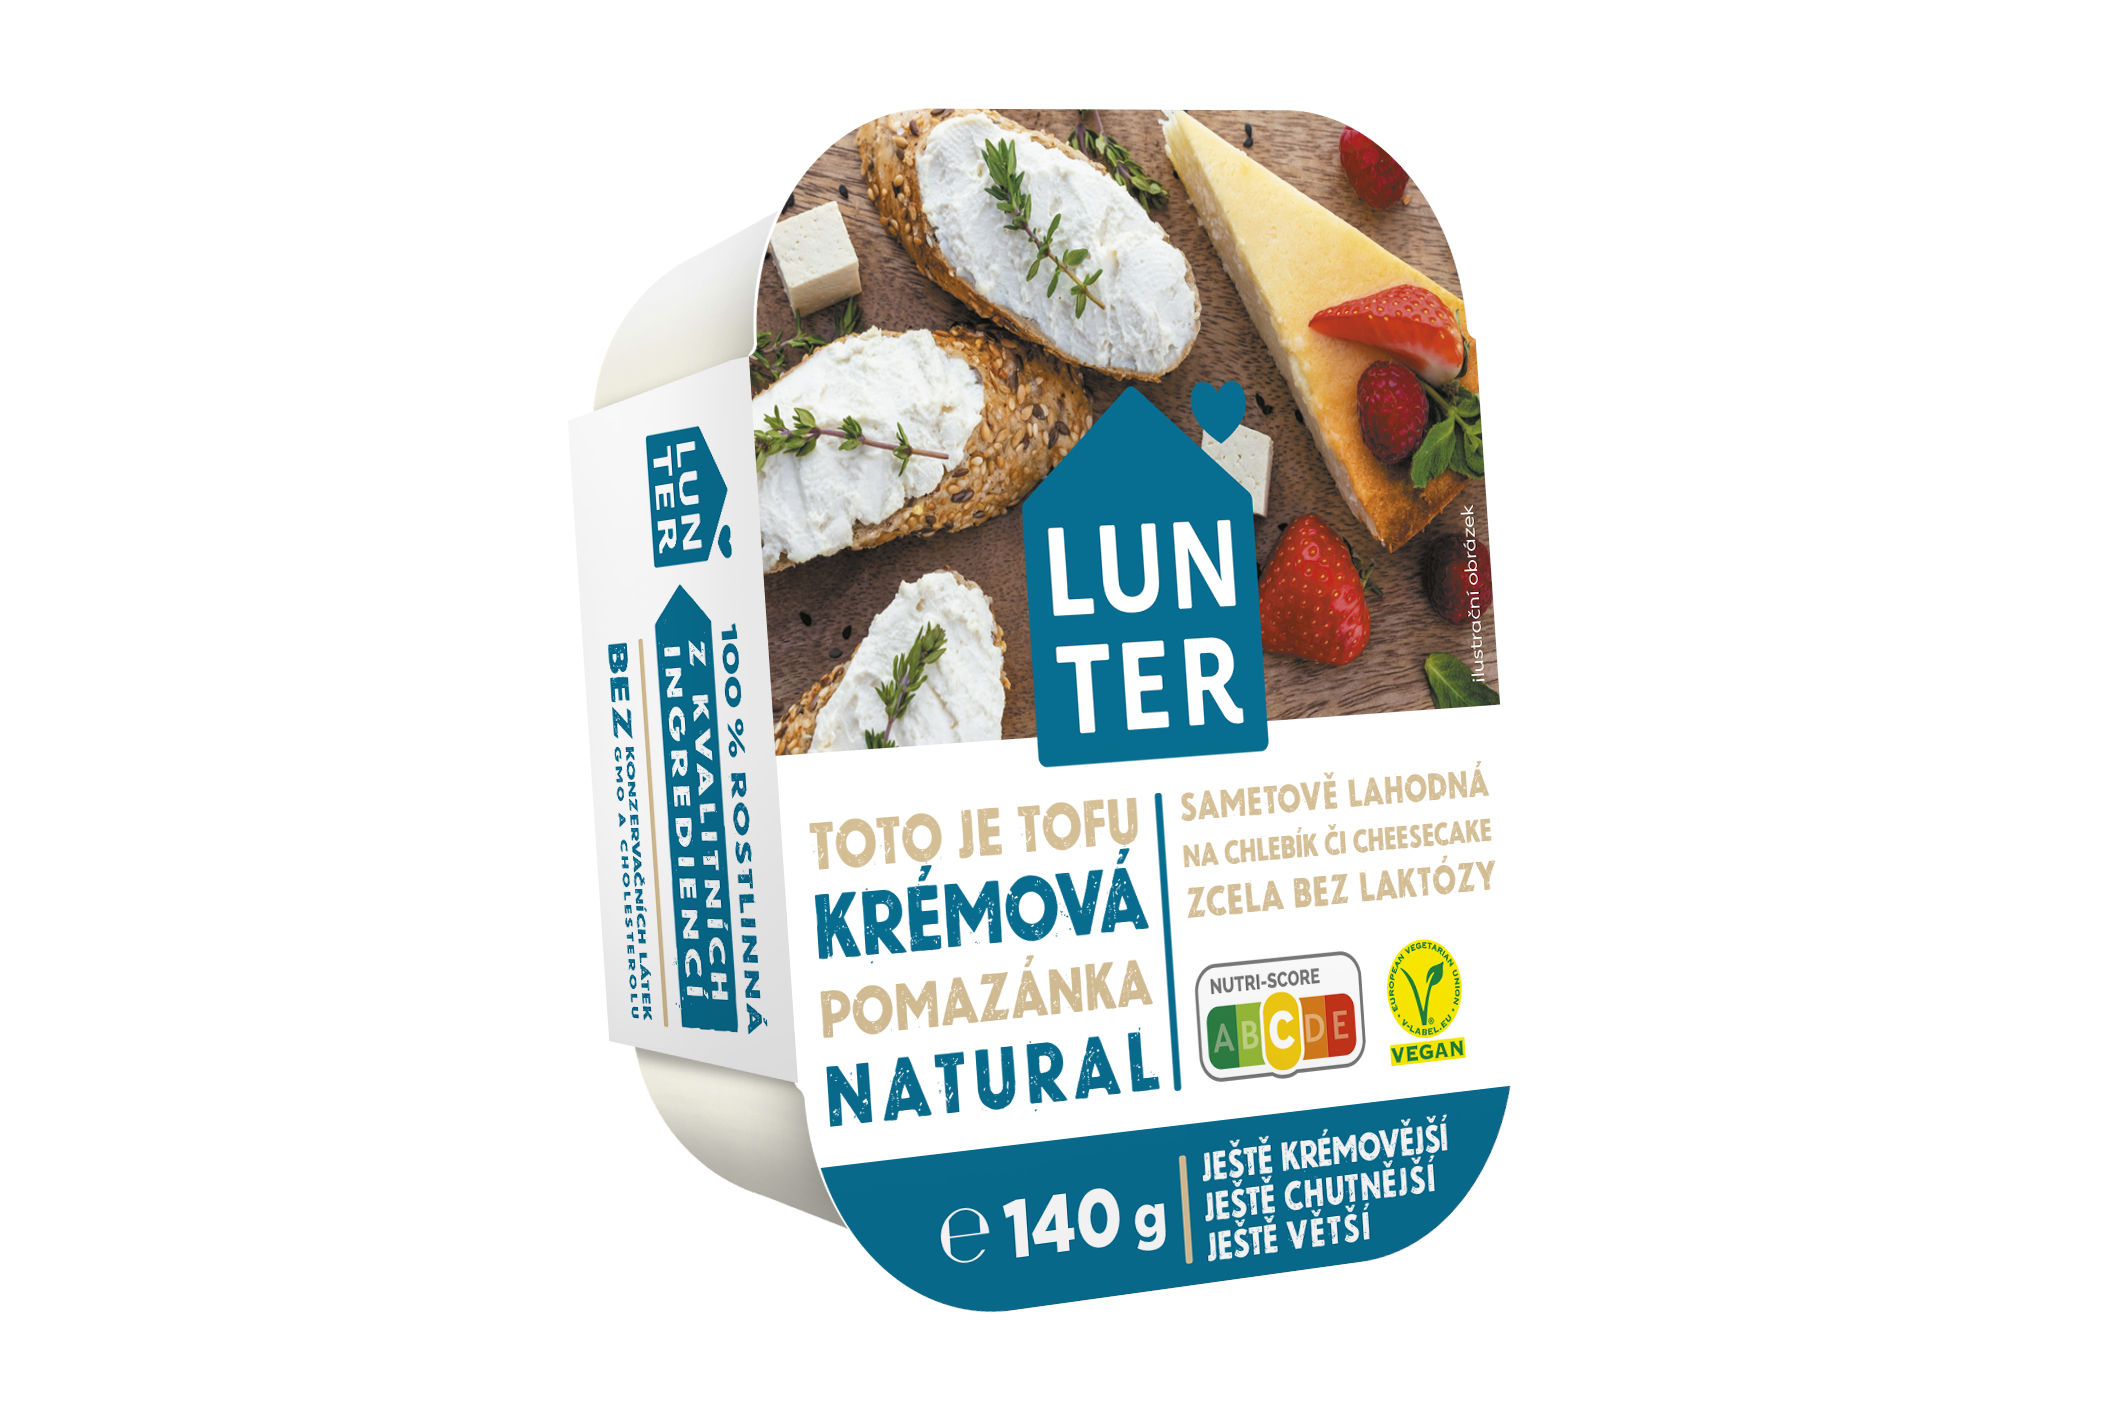 Natural Jihlava Pomazánka tofu krémová natural - Lunter 140g